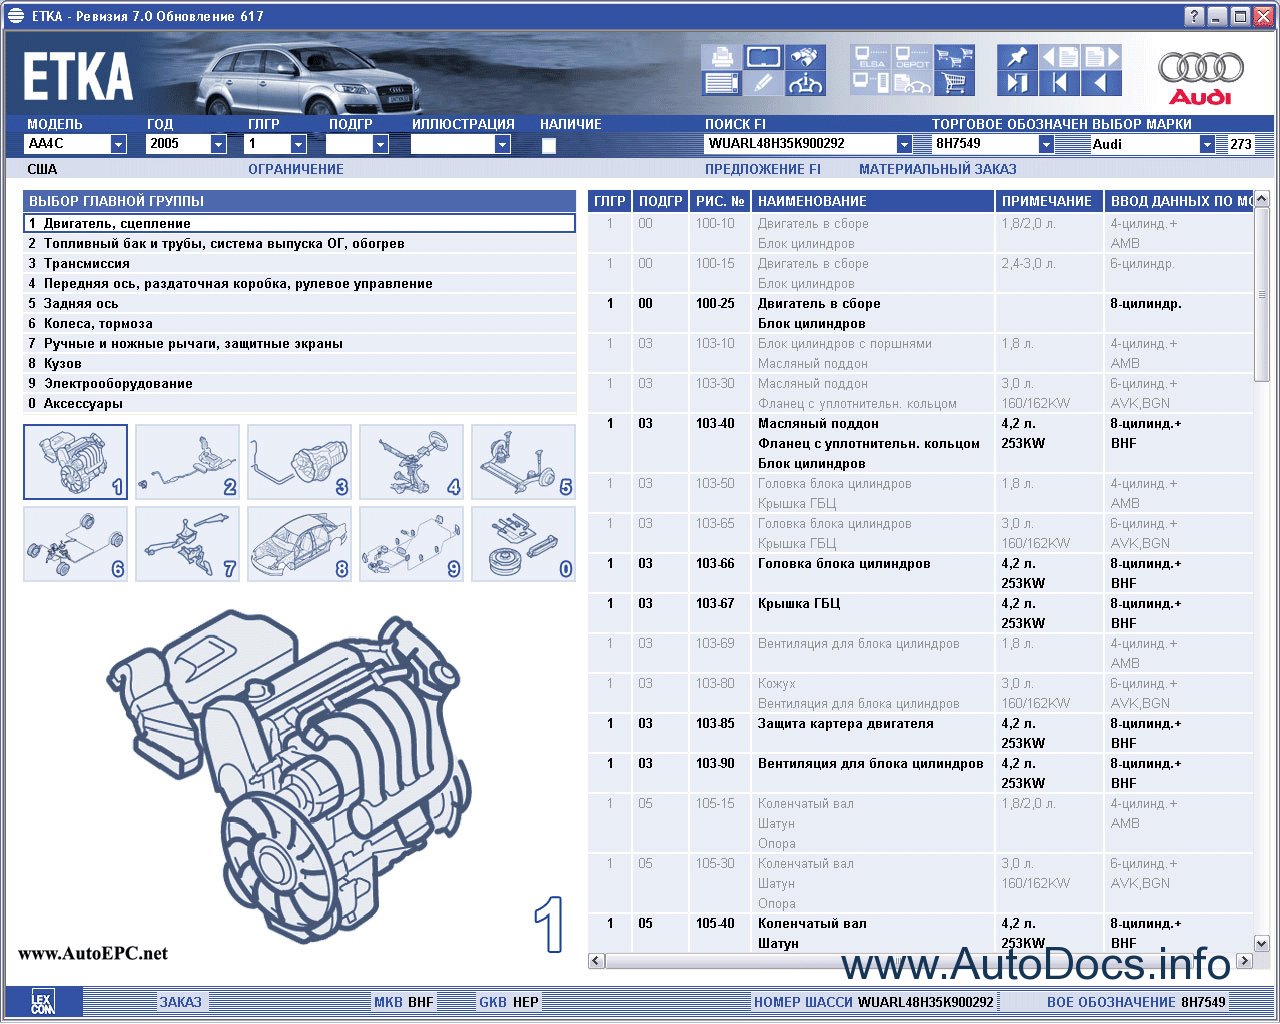 Audi VW ETKA 7.2 spare parts catalog all models Audi ...